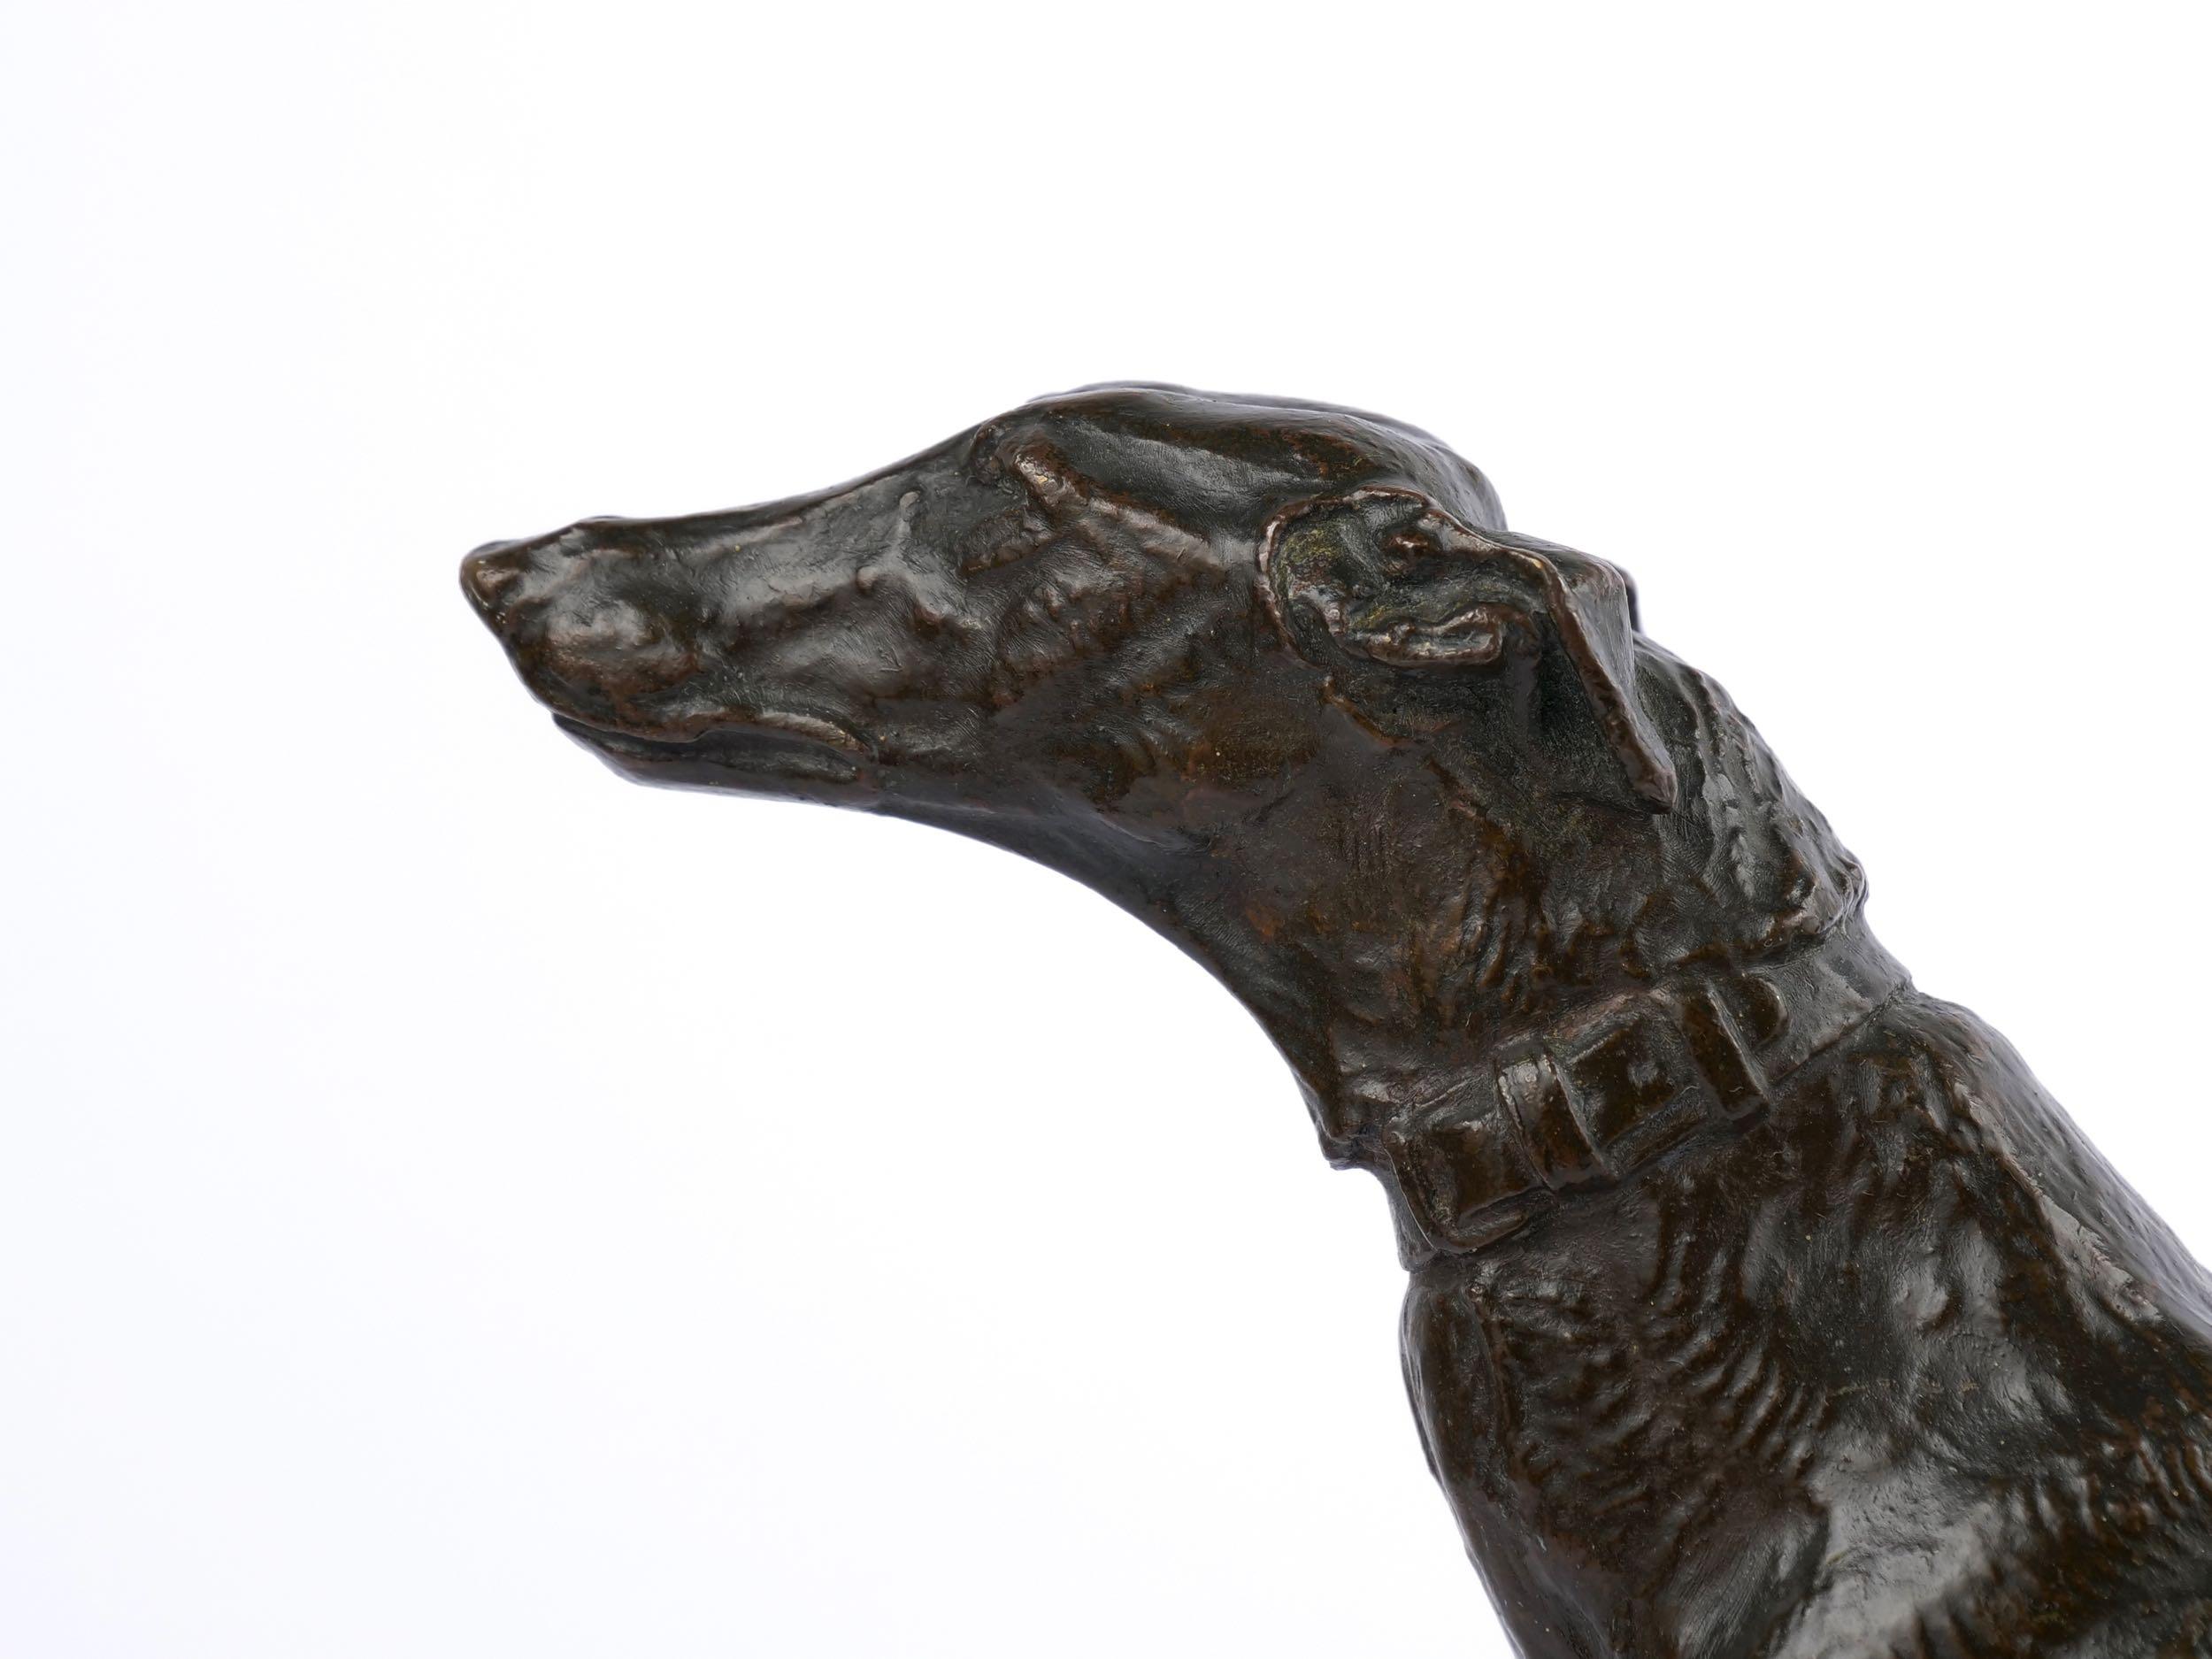 19th Century French Antique Bronze Sculpture of a Greyhound Dog by Emmanuel Fremiet